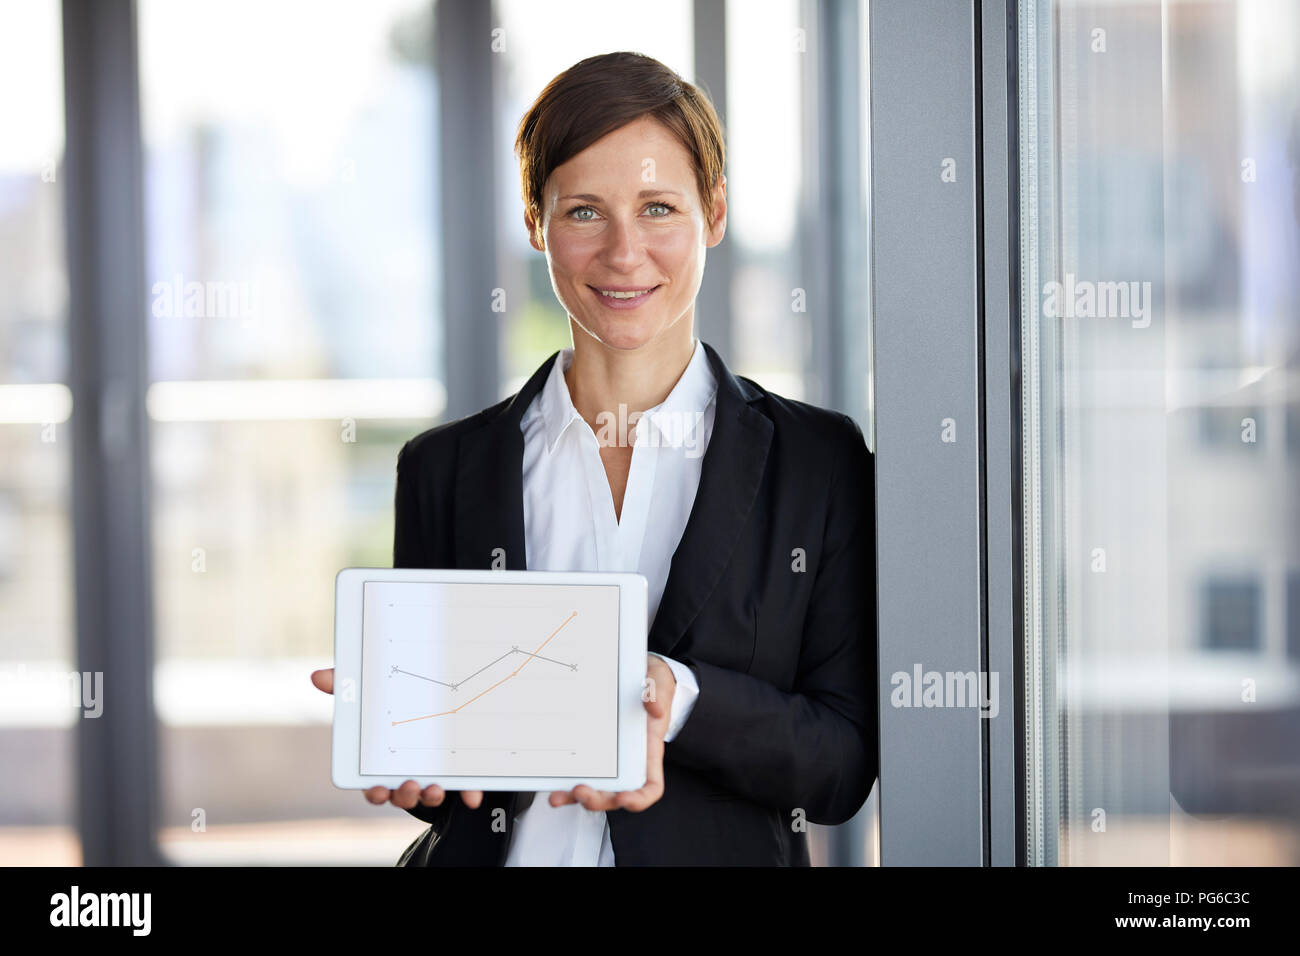 Portrait of smiling businesswoman in office holding tablet showing ascendants graph Banque D'Images